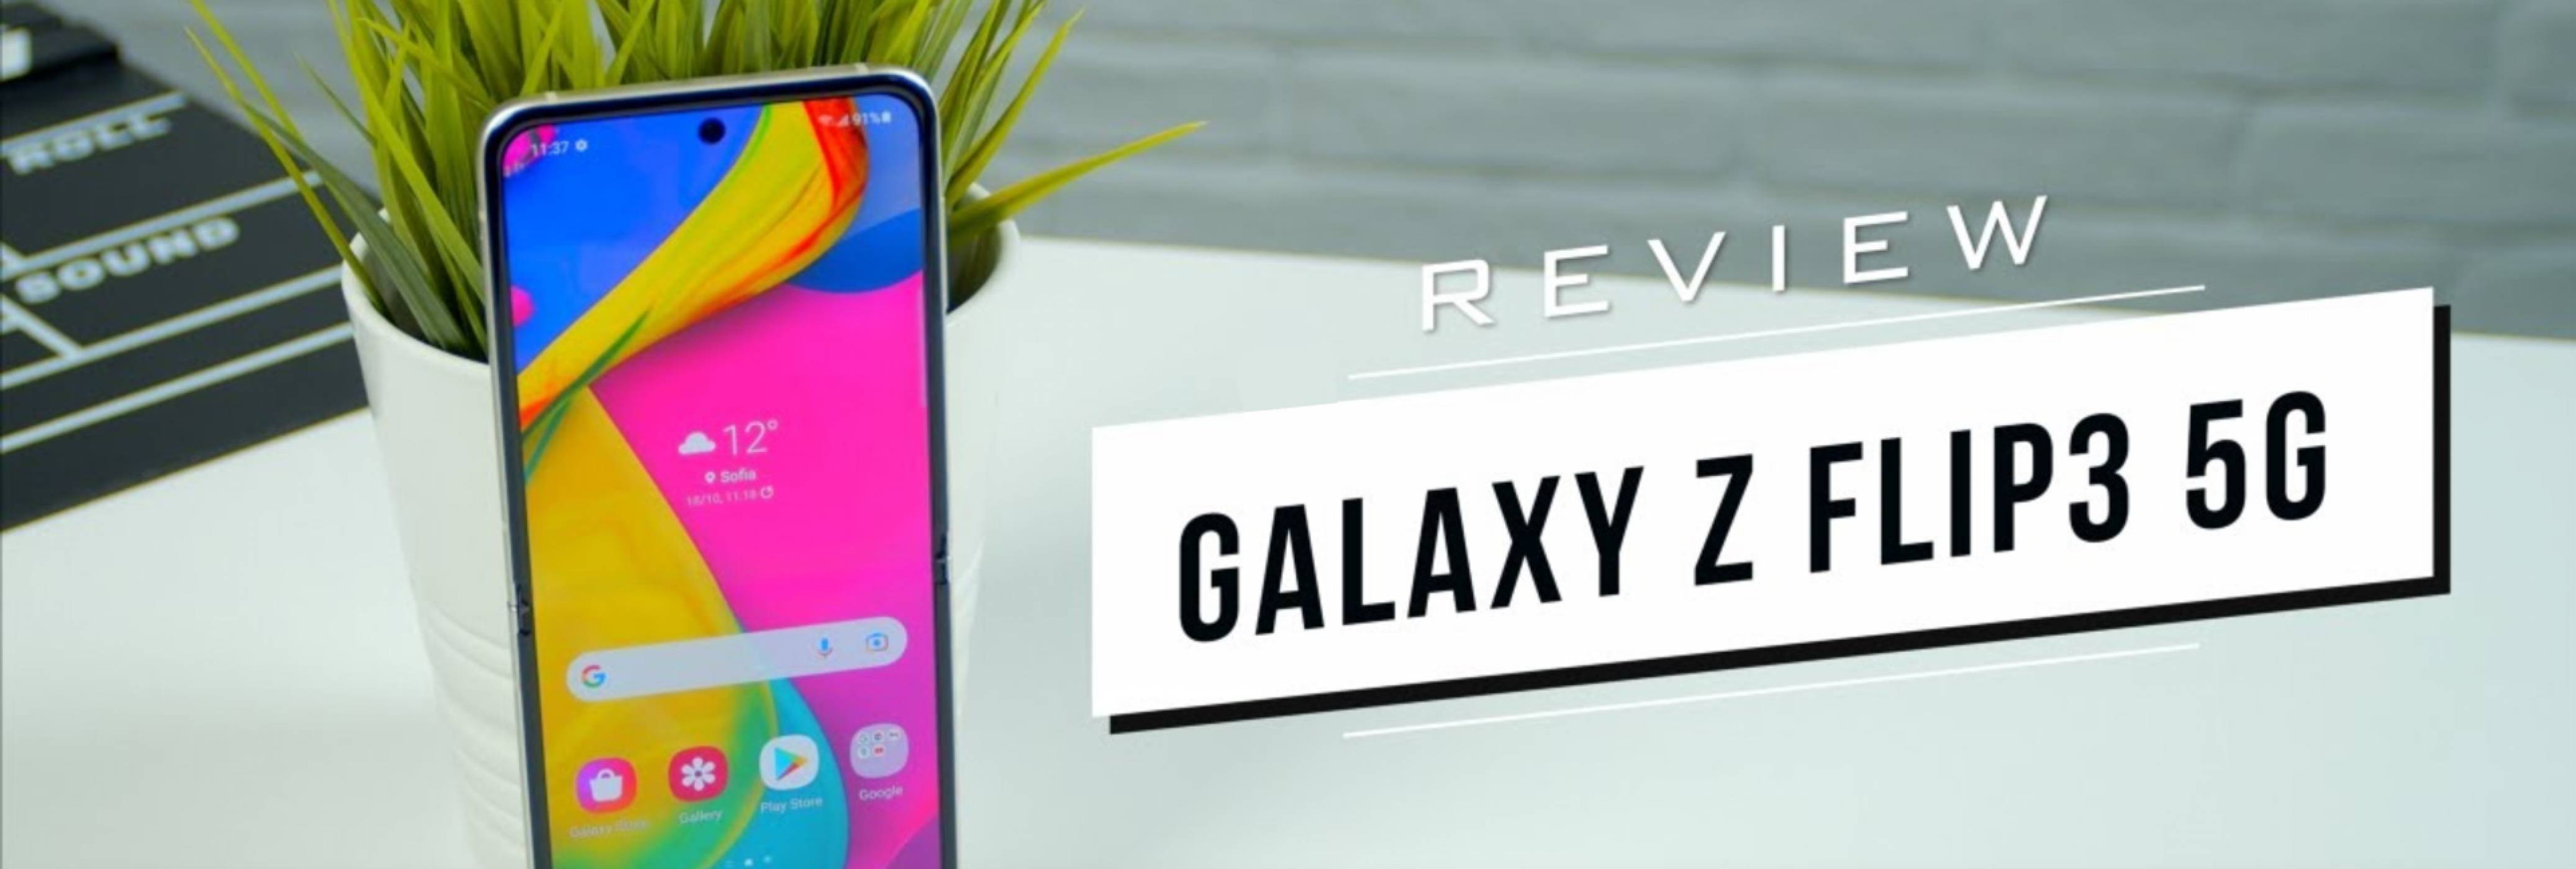 Samsung Galaxy Z Flip3 5G: дизайн и иновации, които спират дъха (ВИДЕО РЕВЮ)